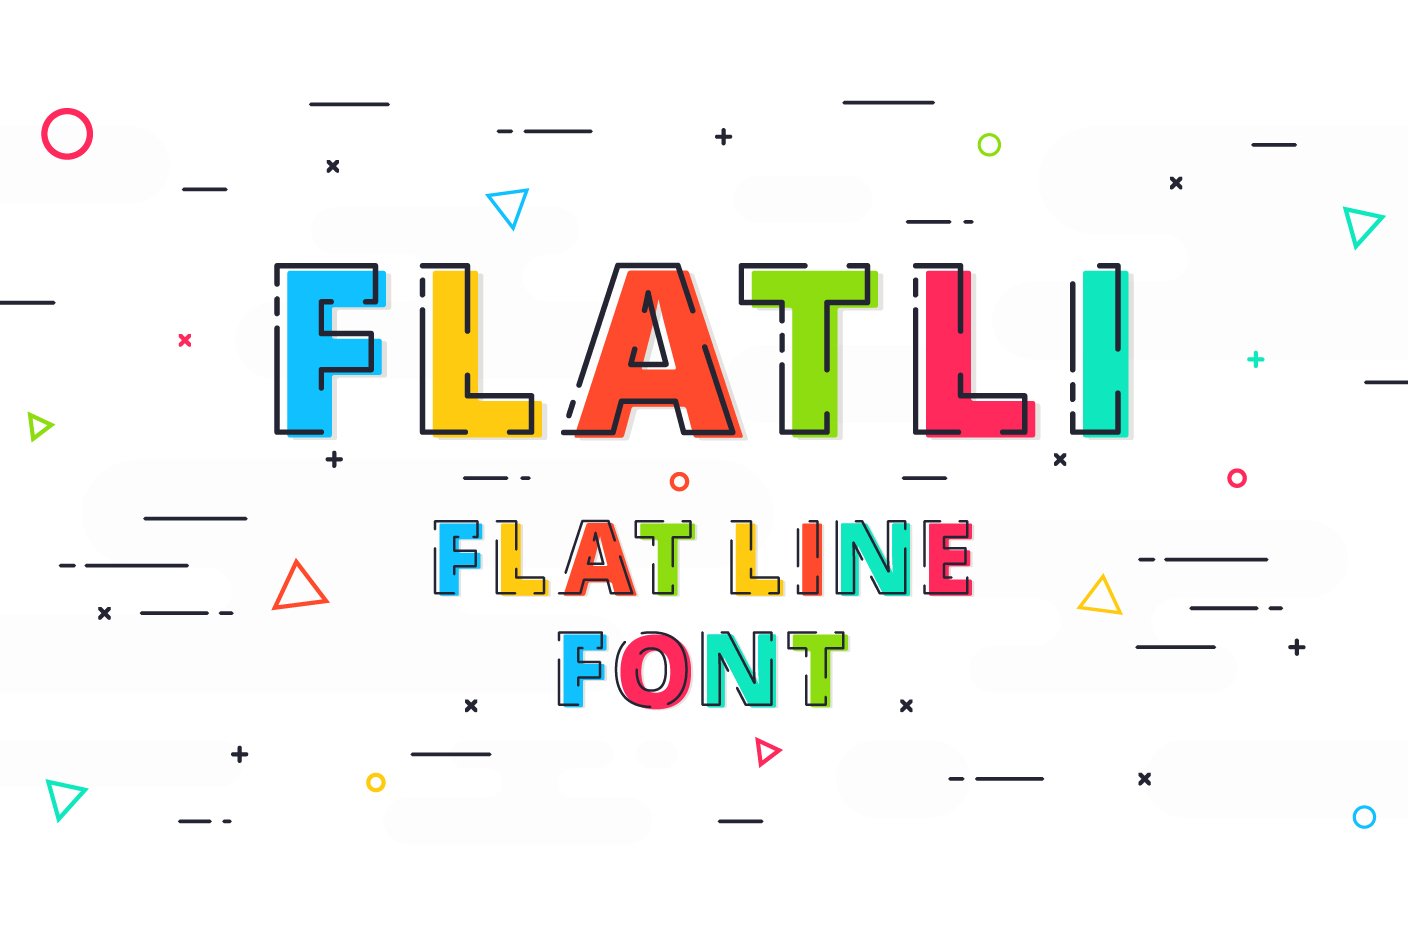 Flatli - Flat Line Vector Font cover image.